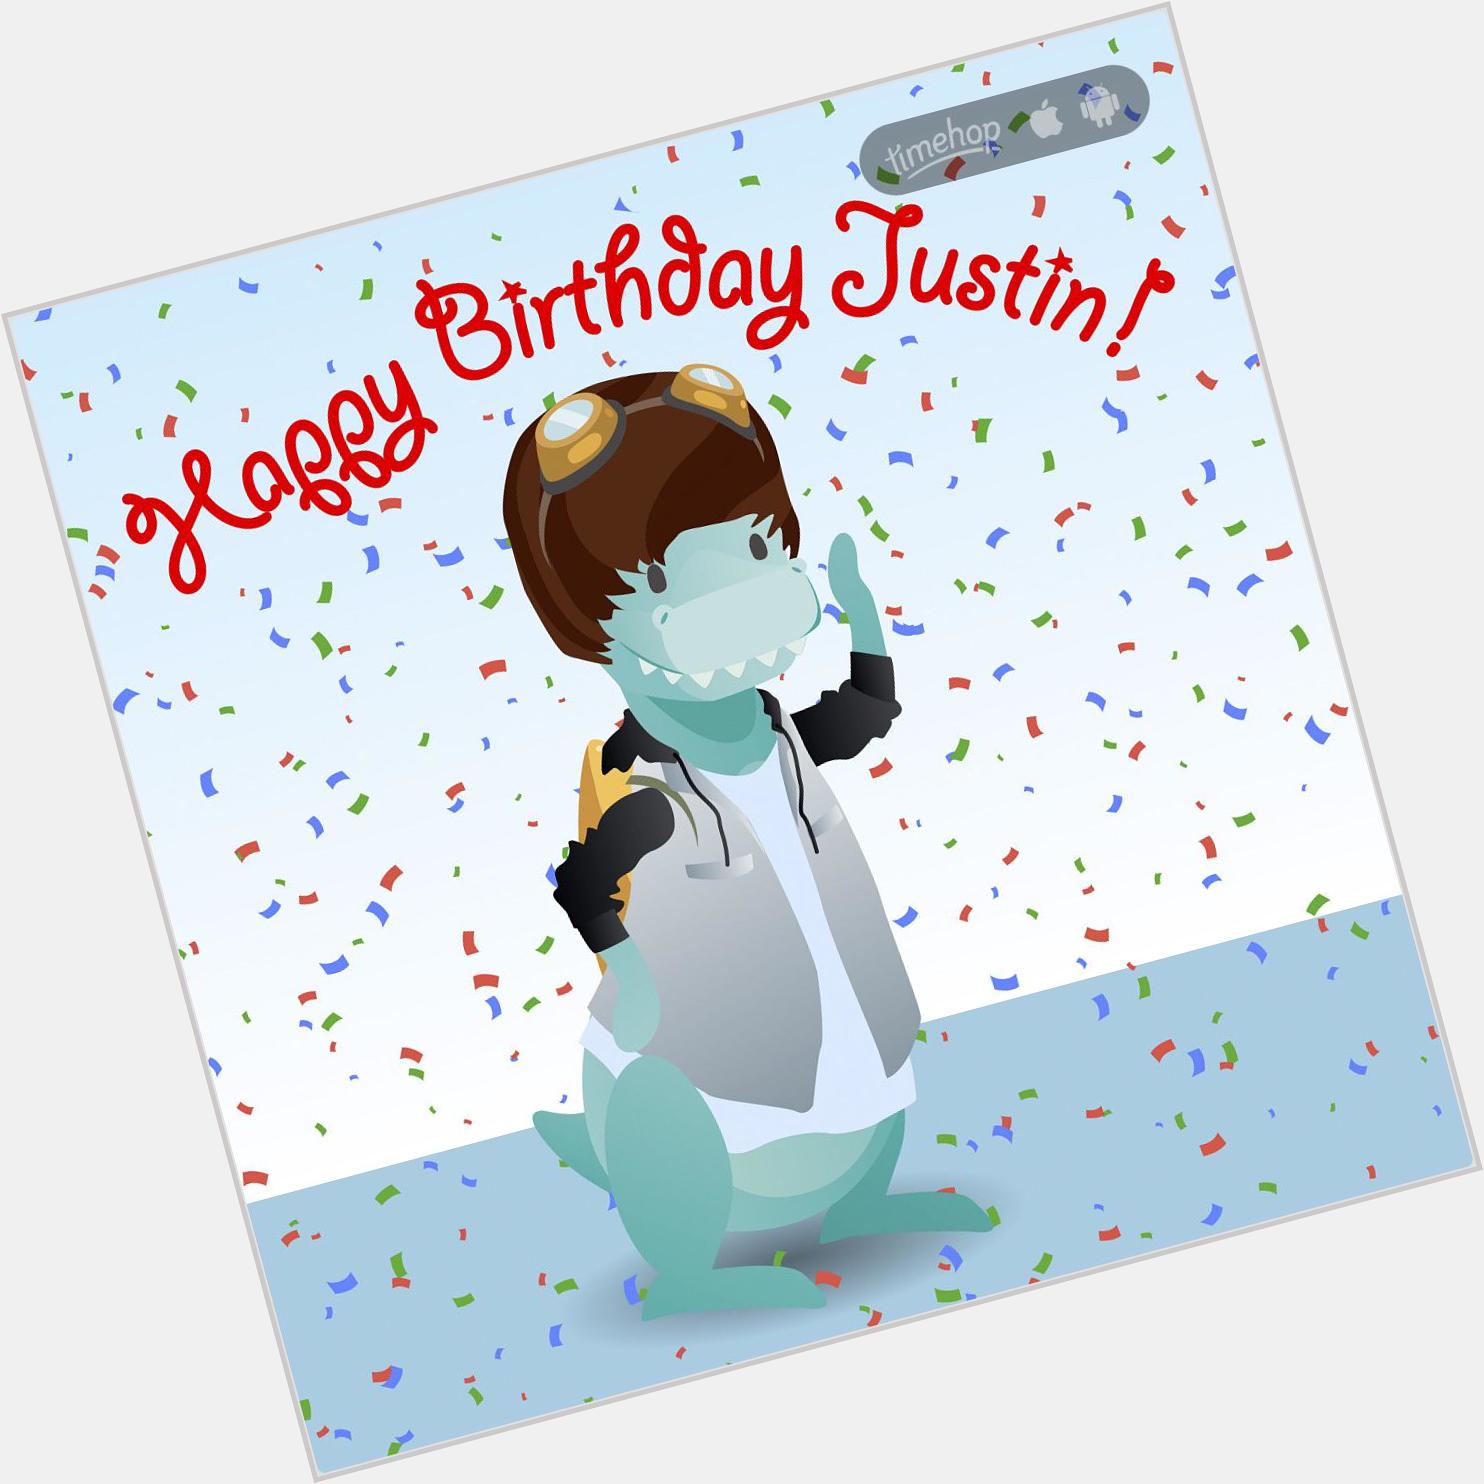 Happy Birthday to Justin Bieber! LOOL 